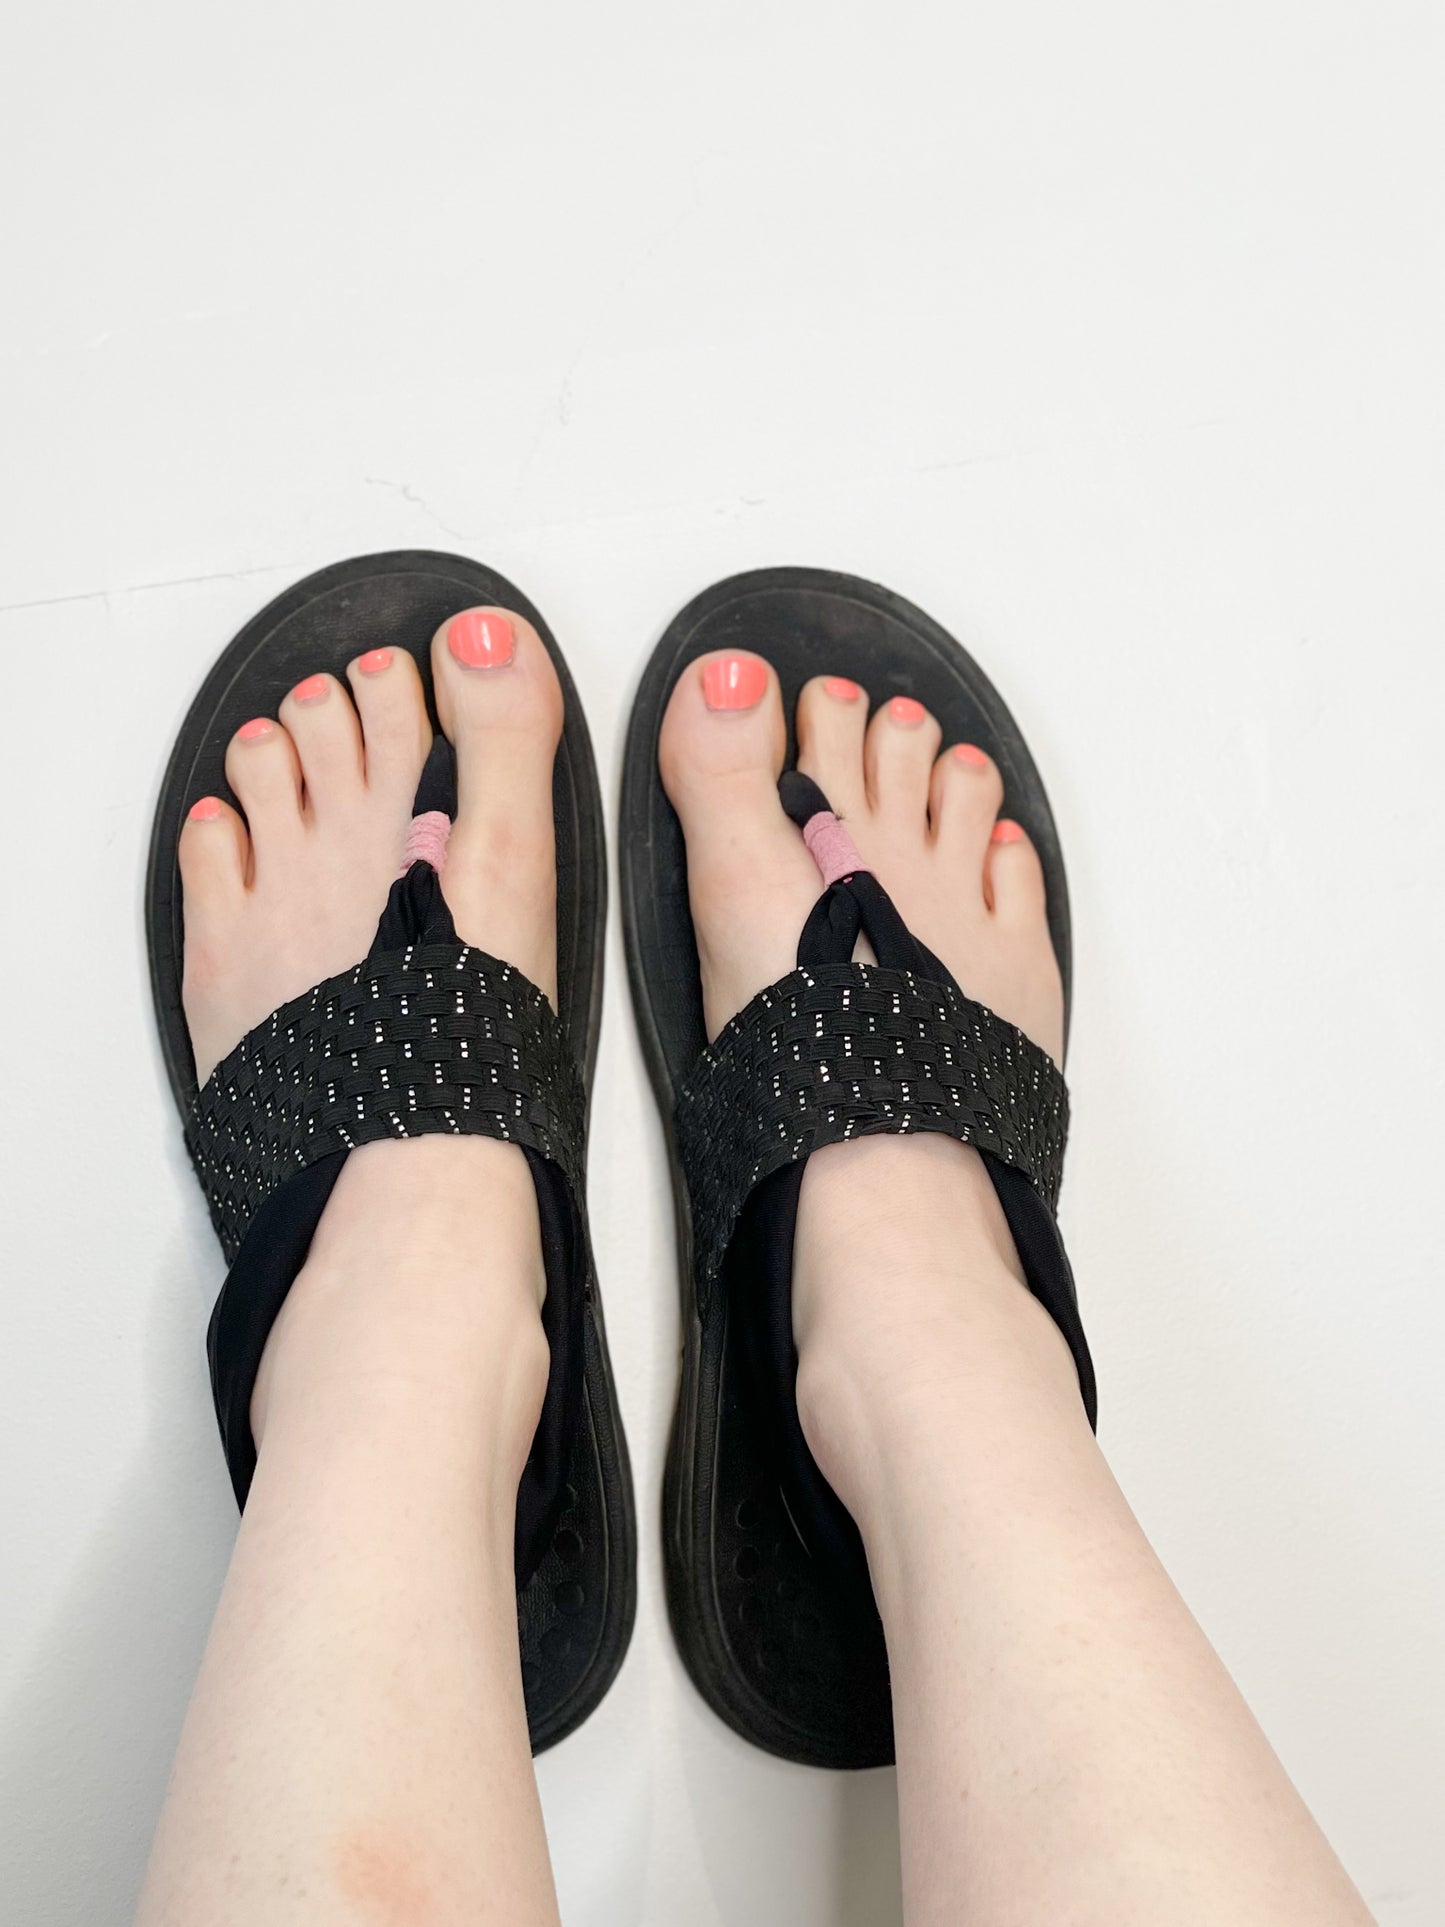 Vionic Black Pink T-Strap Sandals - Size 9